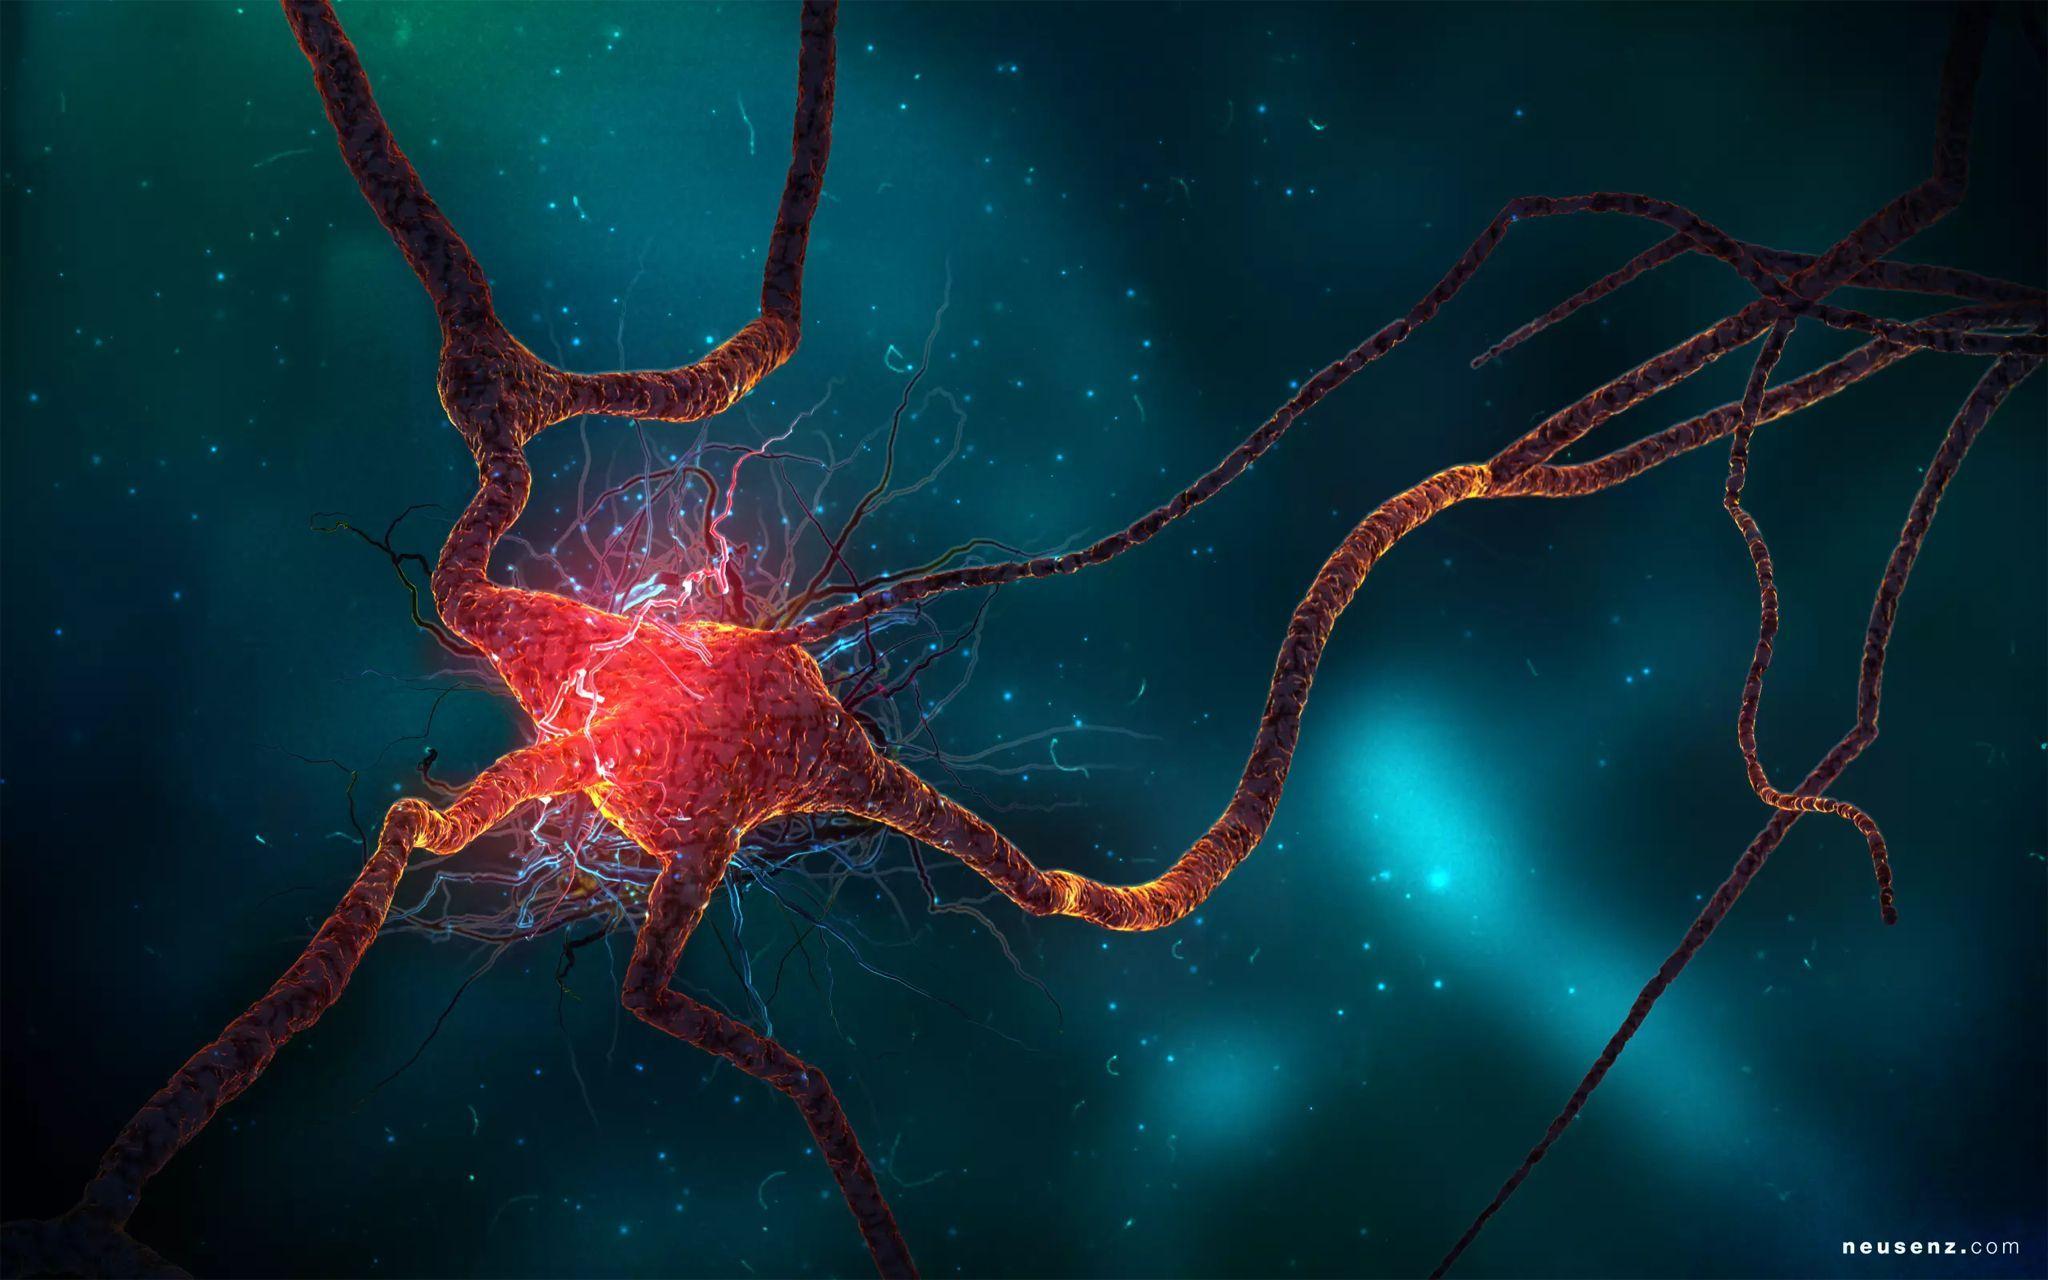 Neuron. Neurology and Epilepsy